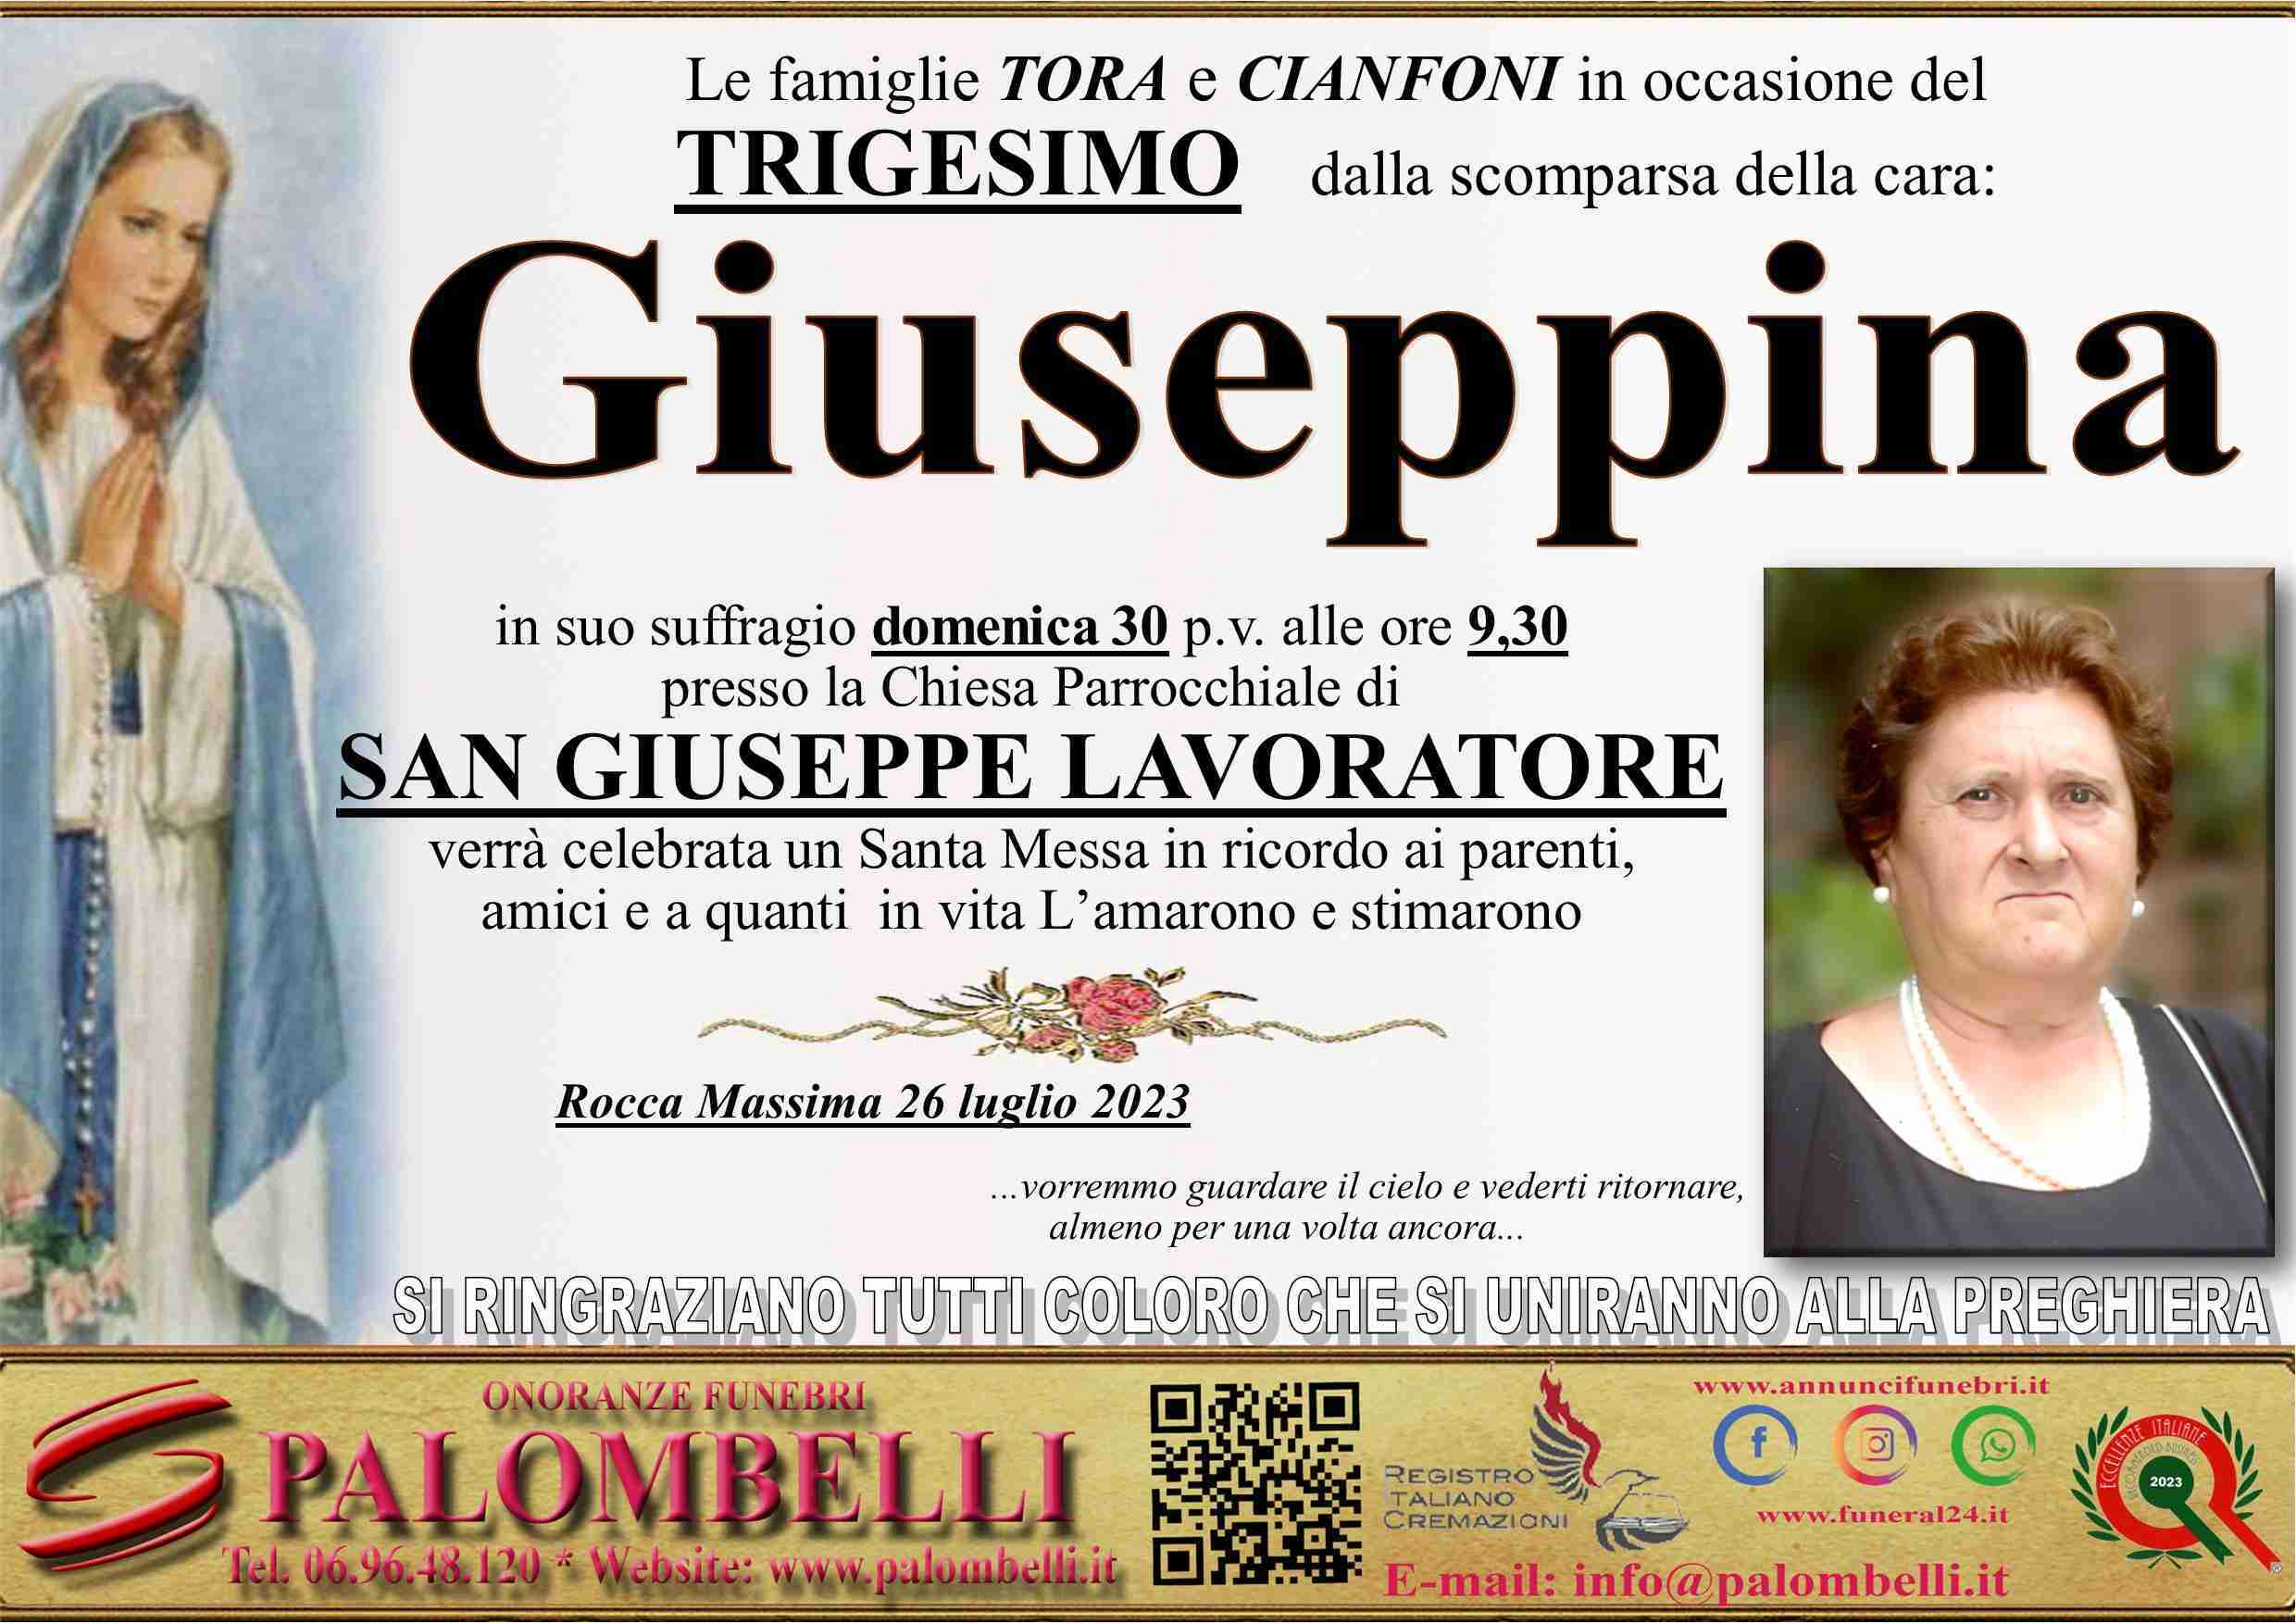 Giuseppina Tora